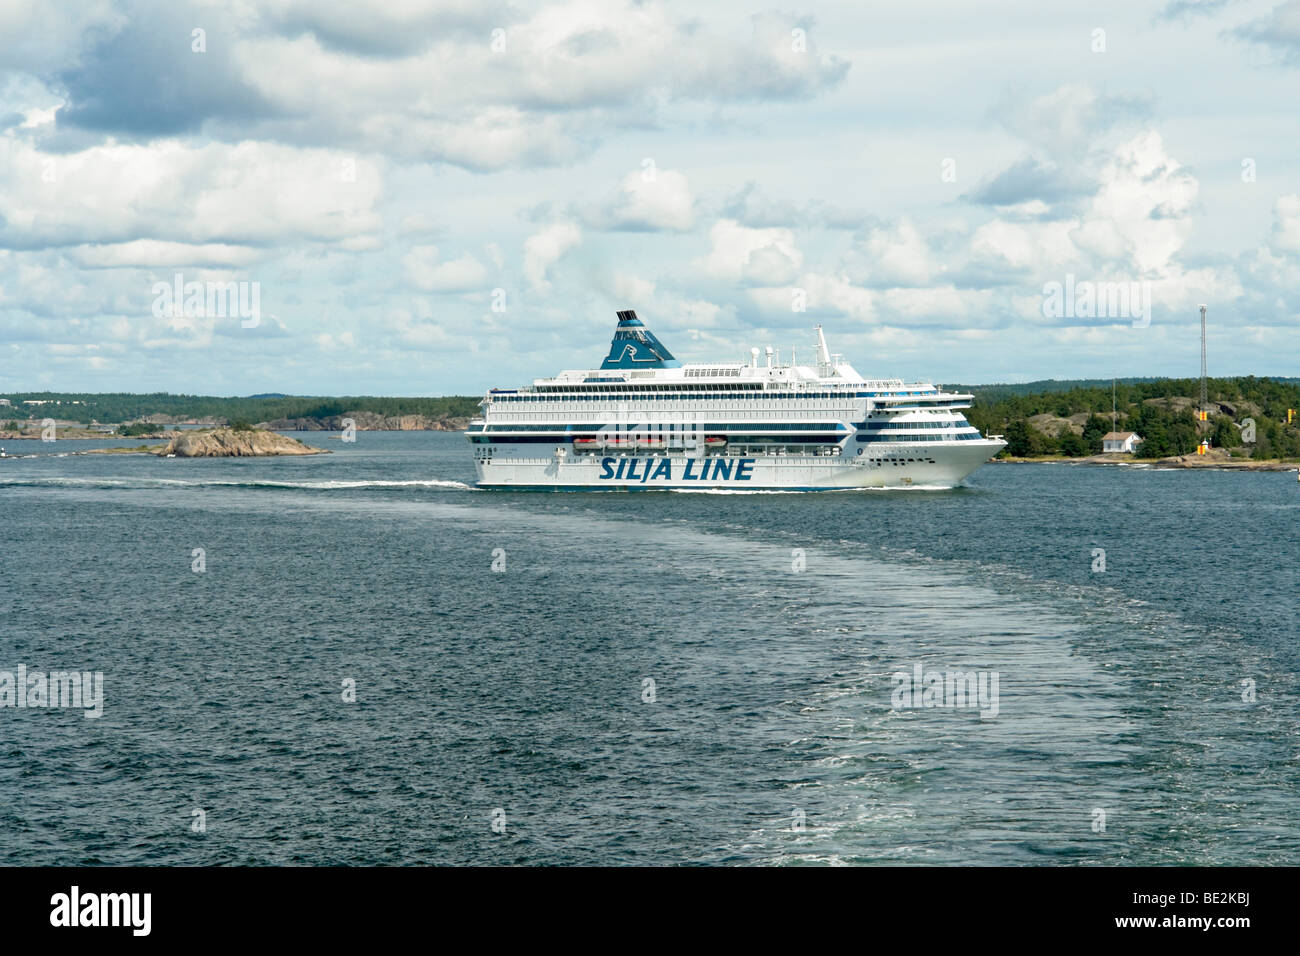 Silja line car ferry silja hi-res stock photography and images - Alamy